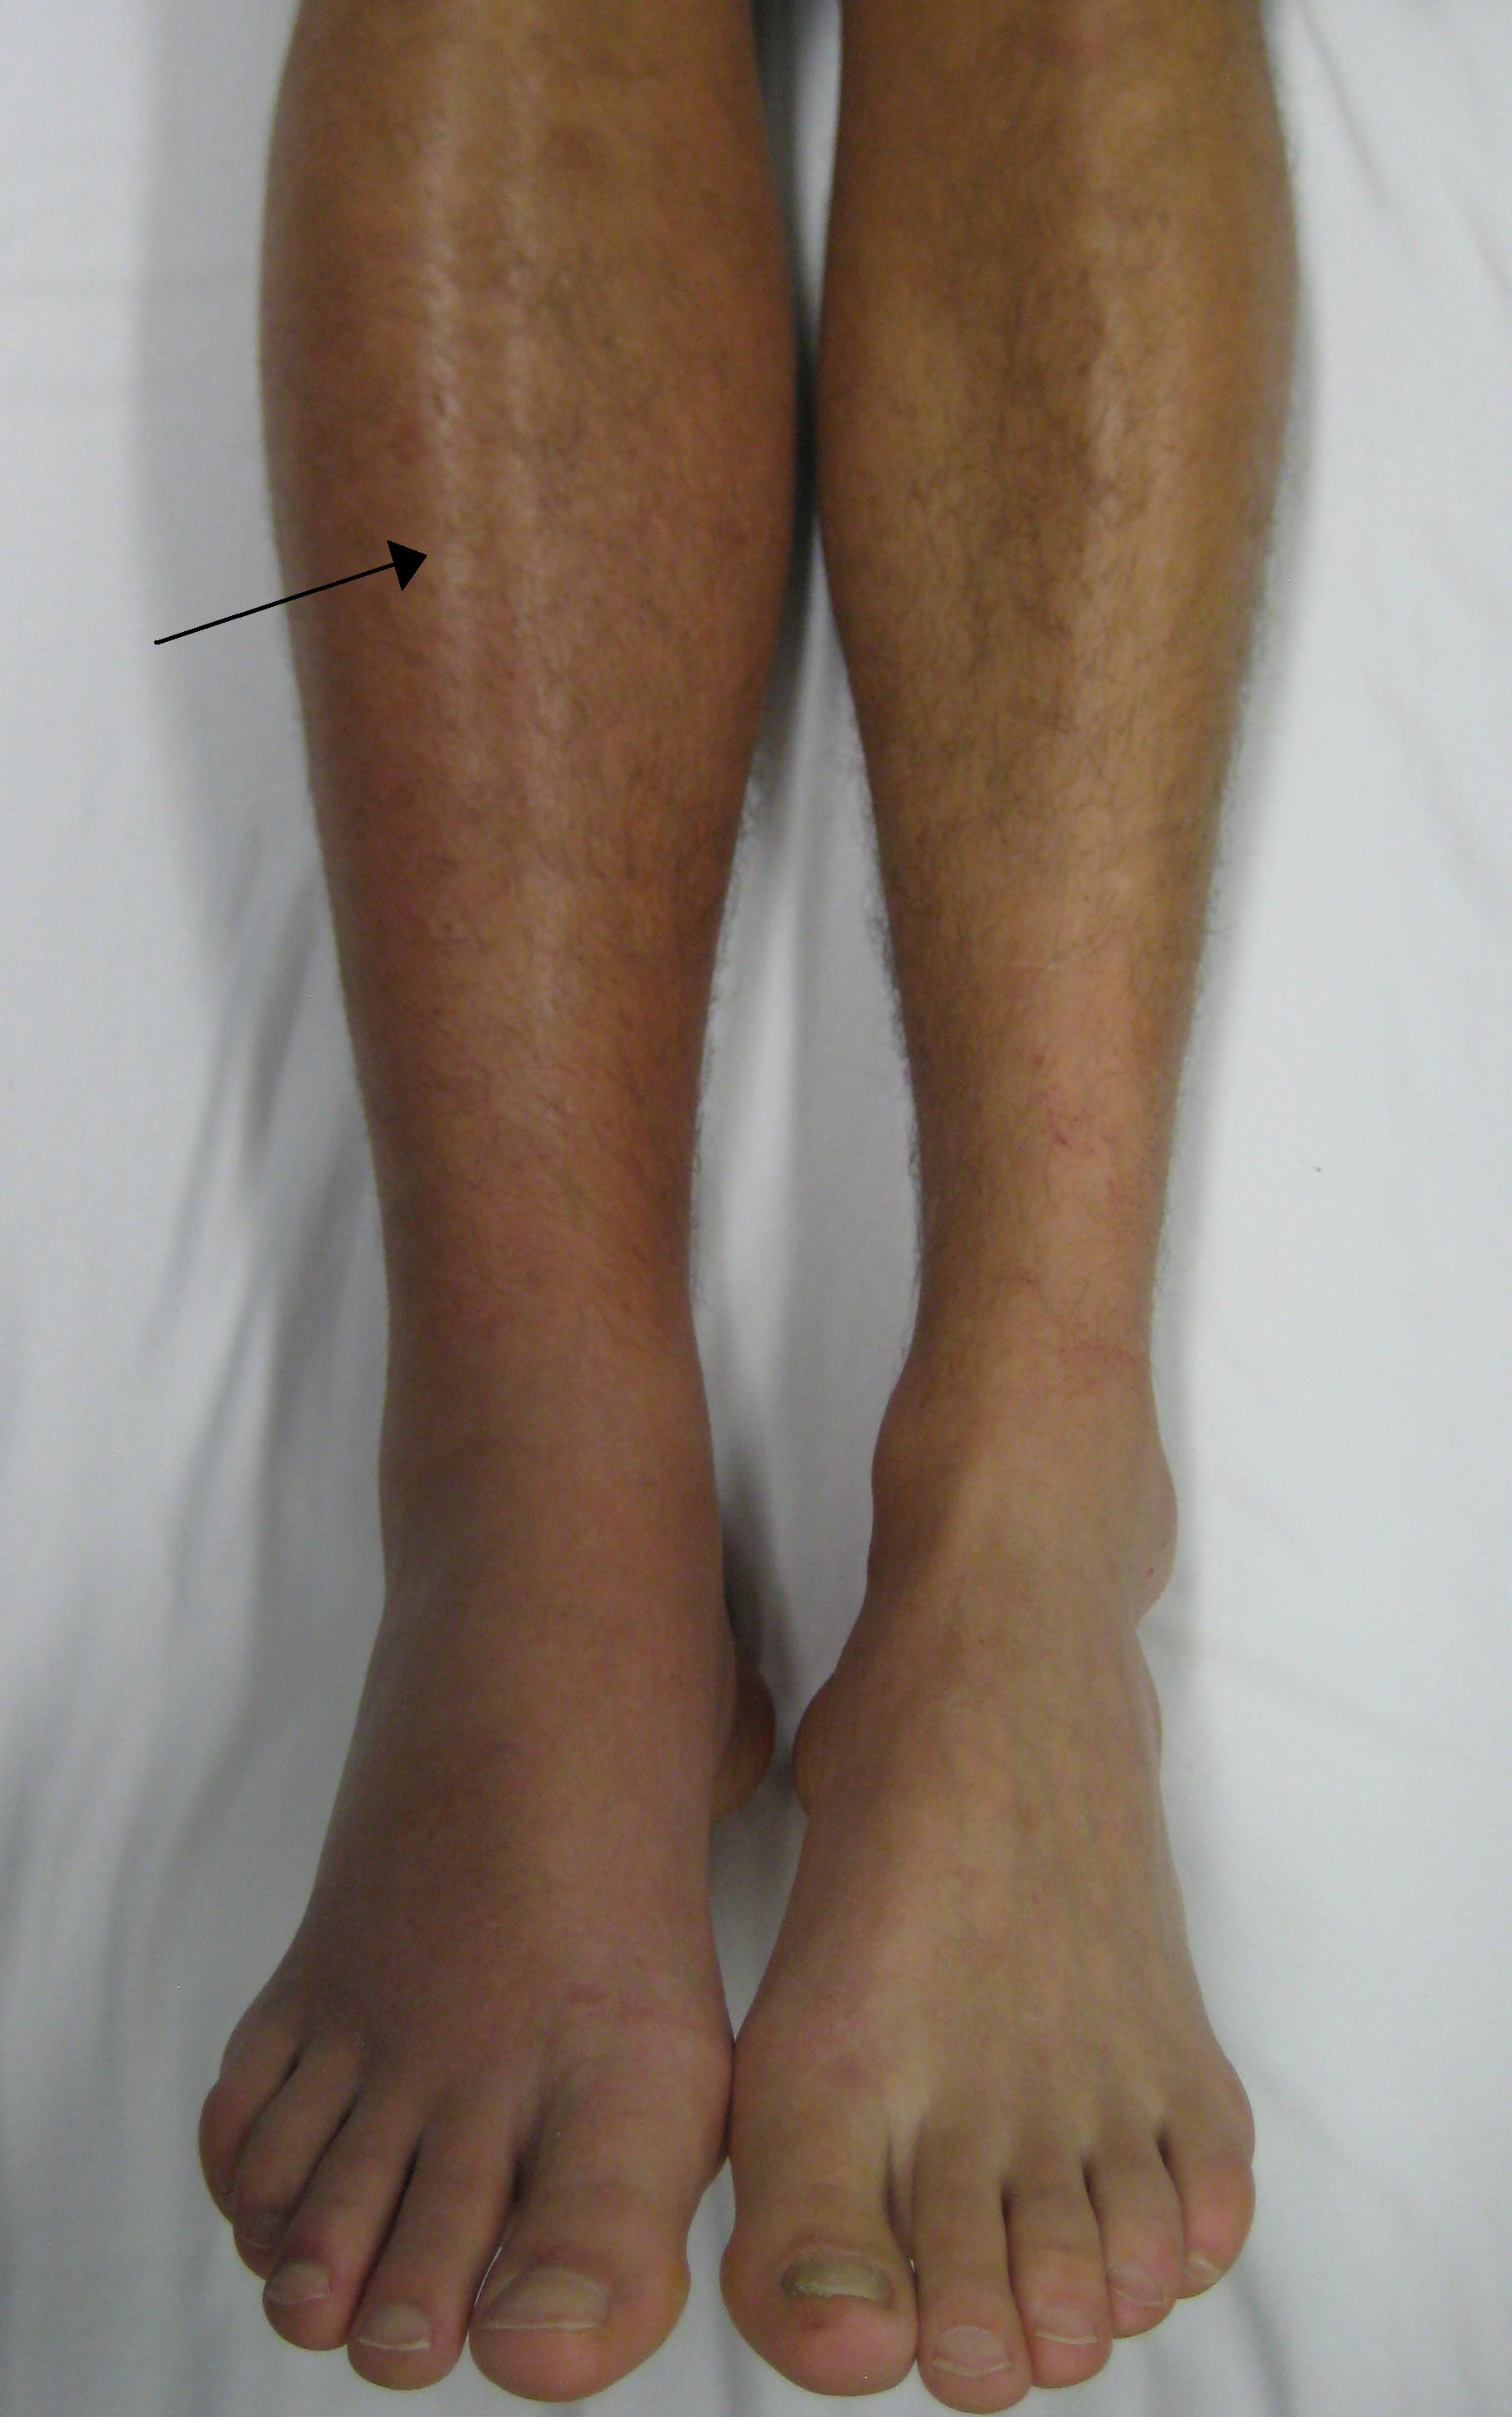 Unilateral Leg Swelling